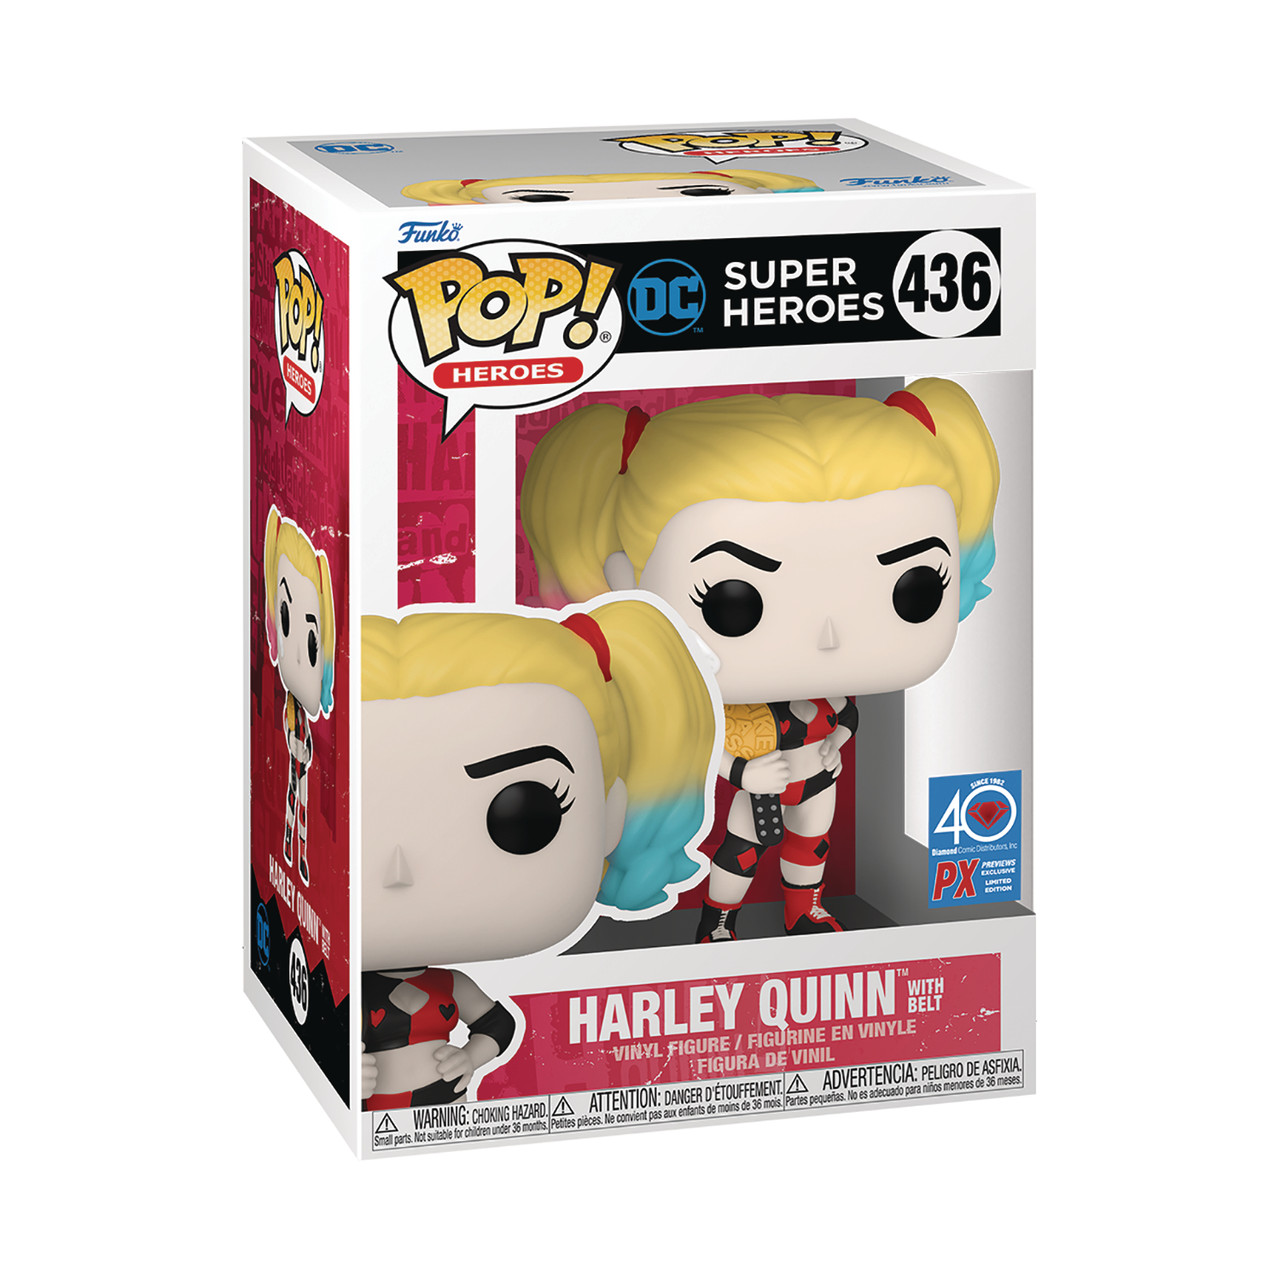 Funko POP Harley Quinn 371 Black Light DC Comics